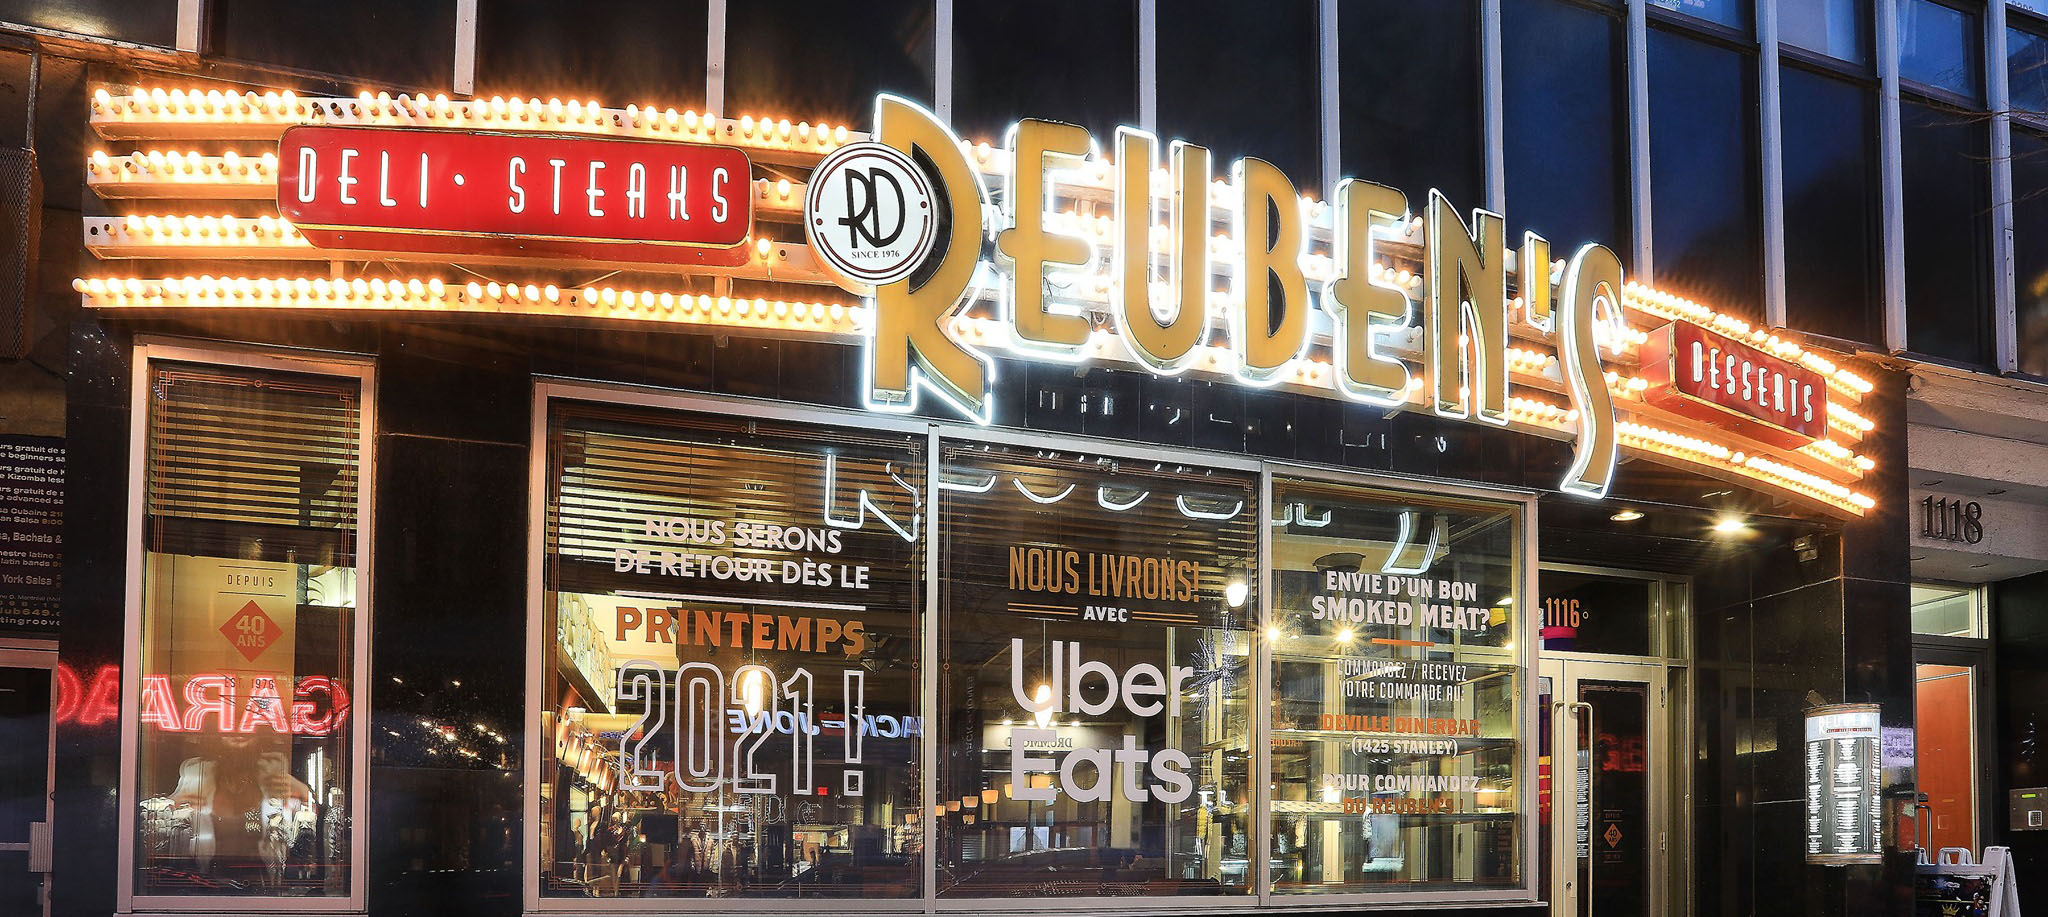 Reuben's Deli & Steakhouse Restaurant